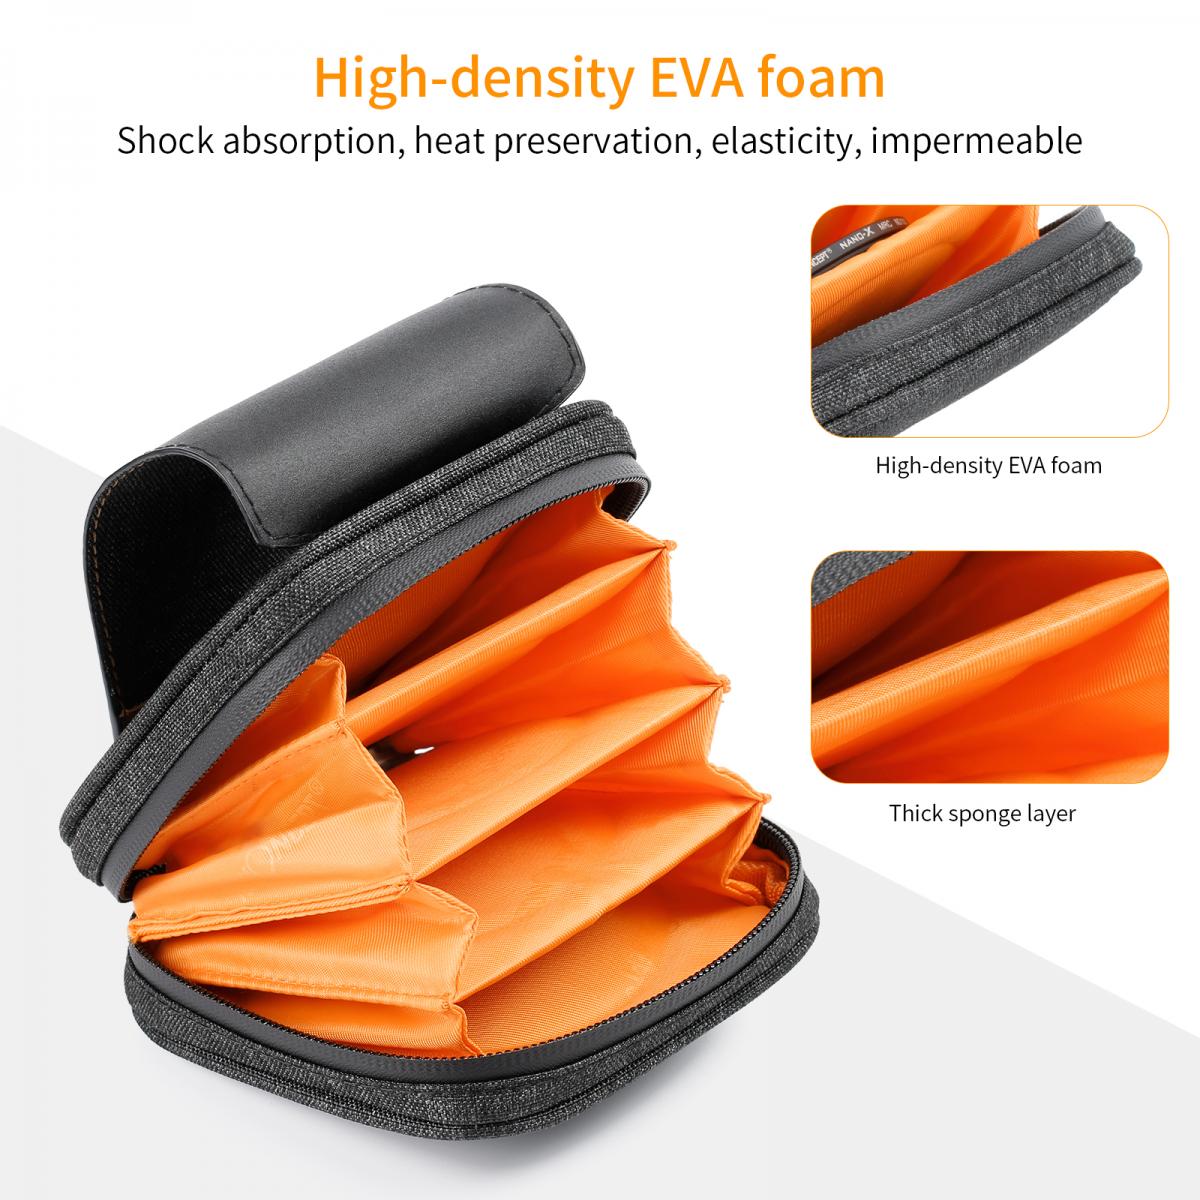 Camera Lens Filter Pouch Case, 4-Pocket Filter Carry Case, Belt Bag Pouch Water-Resistant shockproof and Dustproof Design for 37mm-95mm Filters